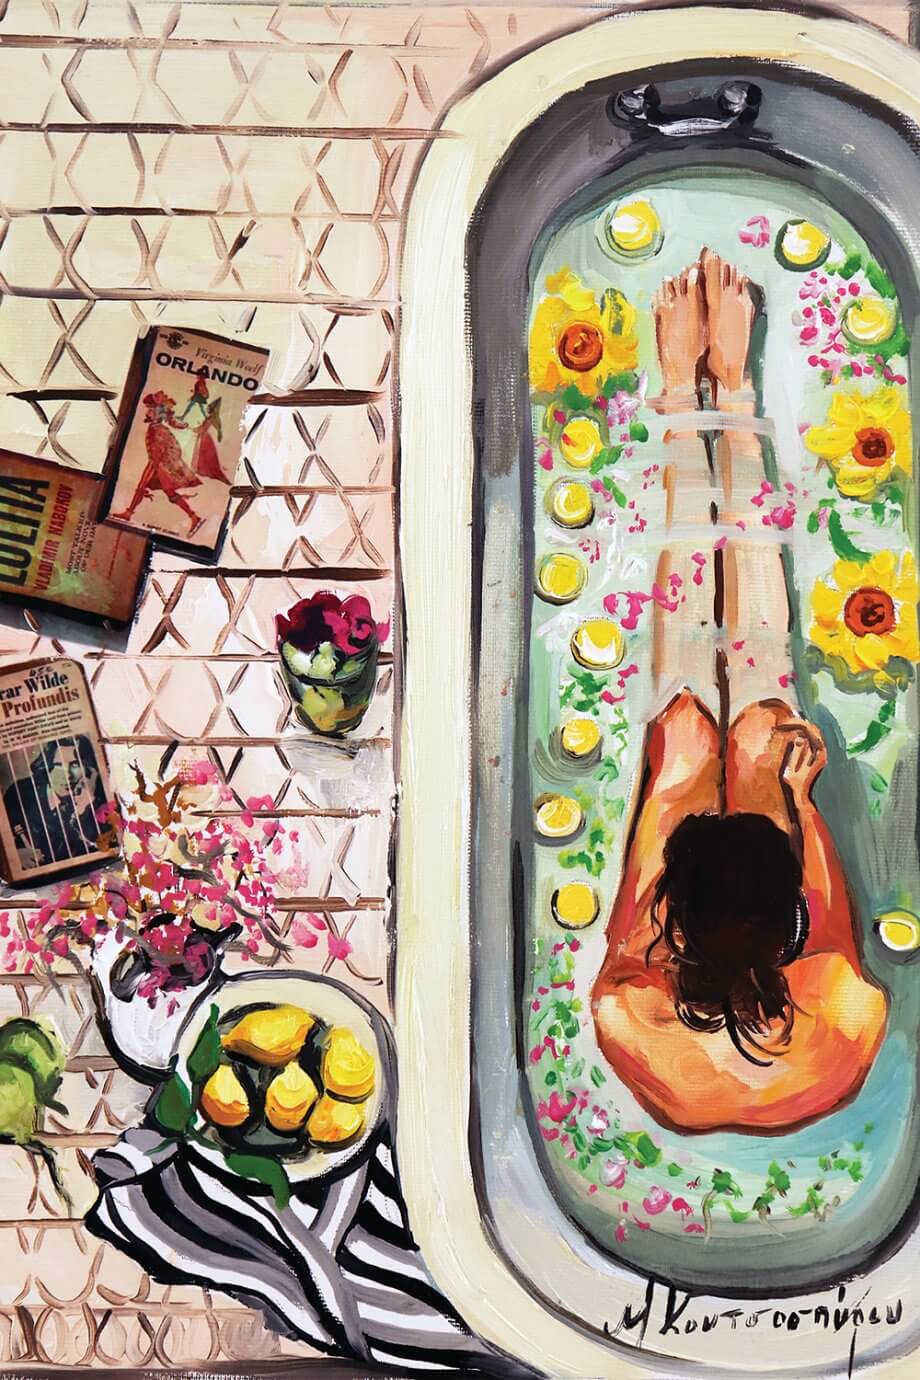 Marina Koutsospyrou painting - women in bathtub